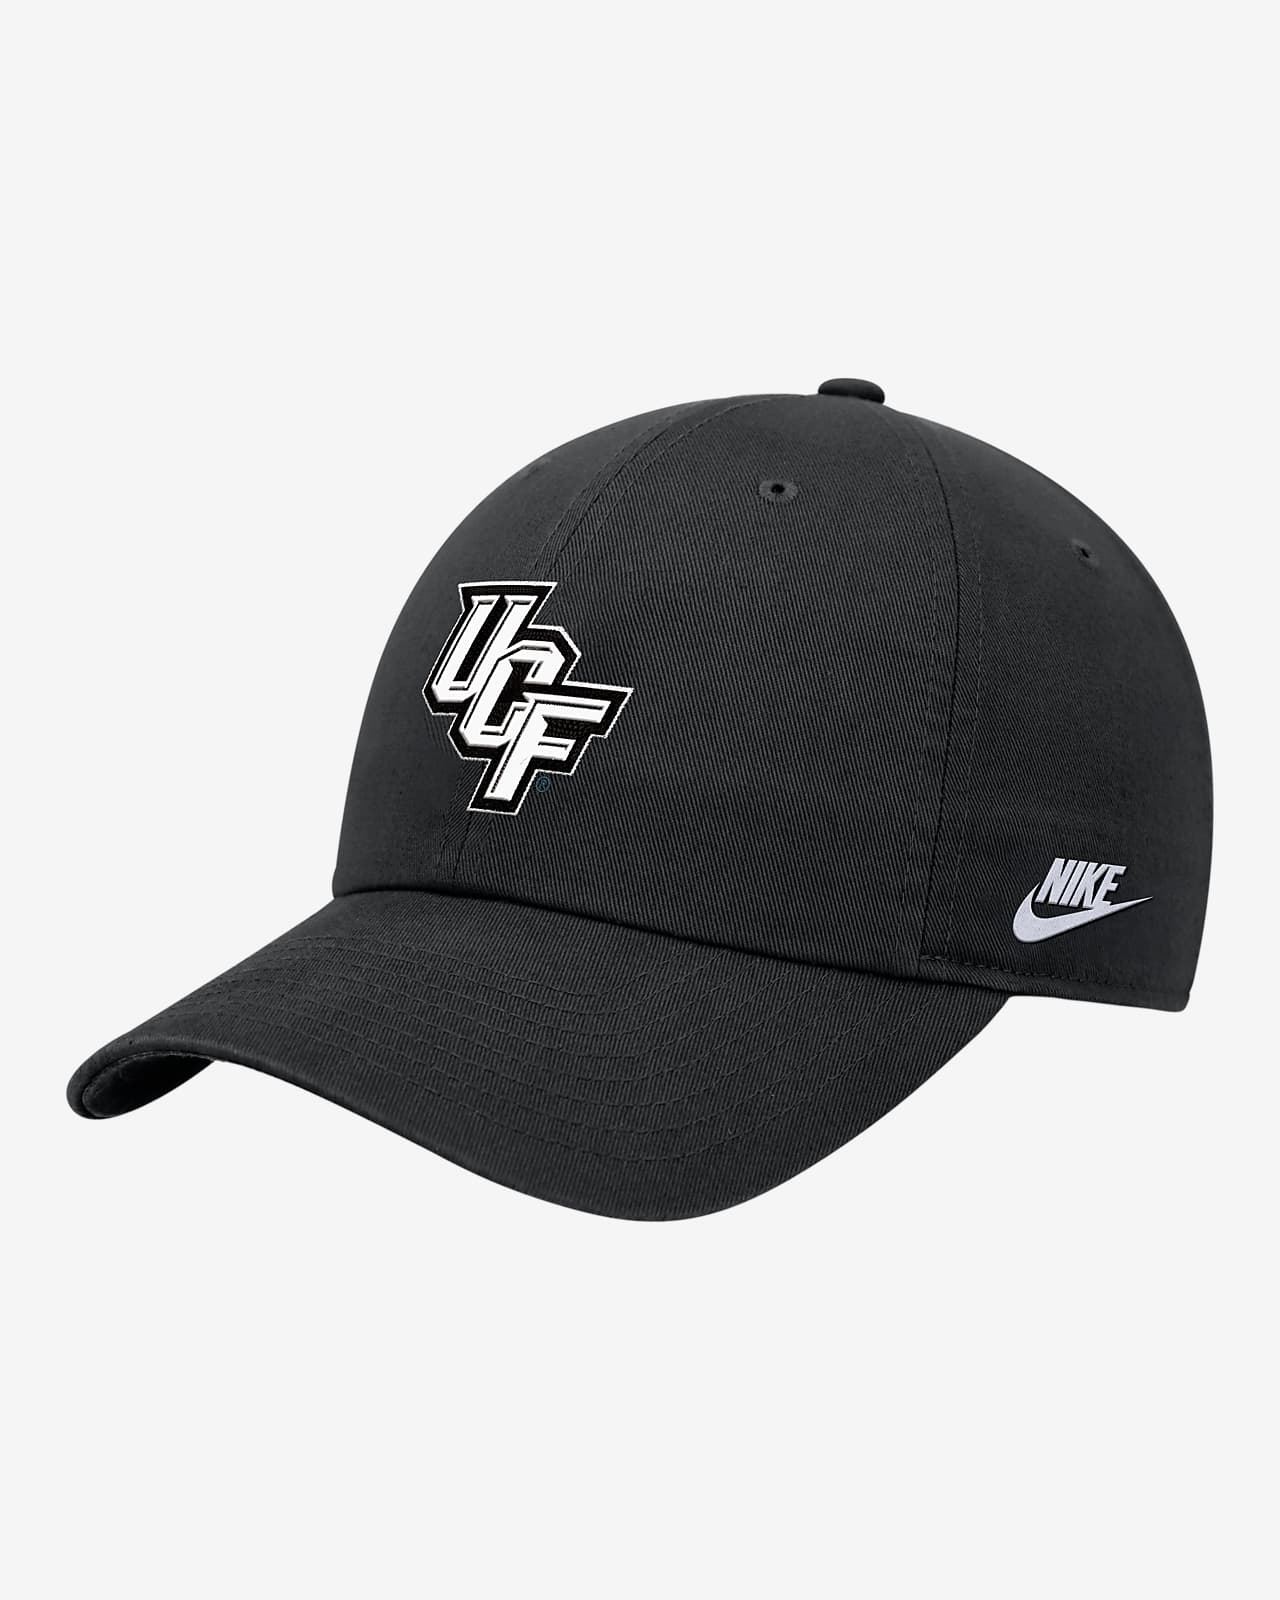 UCF Nike College Cap